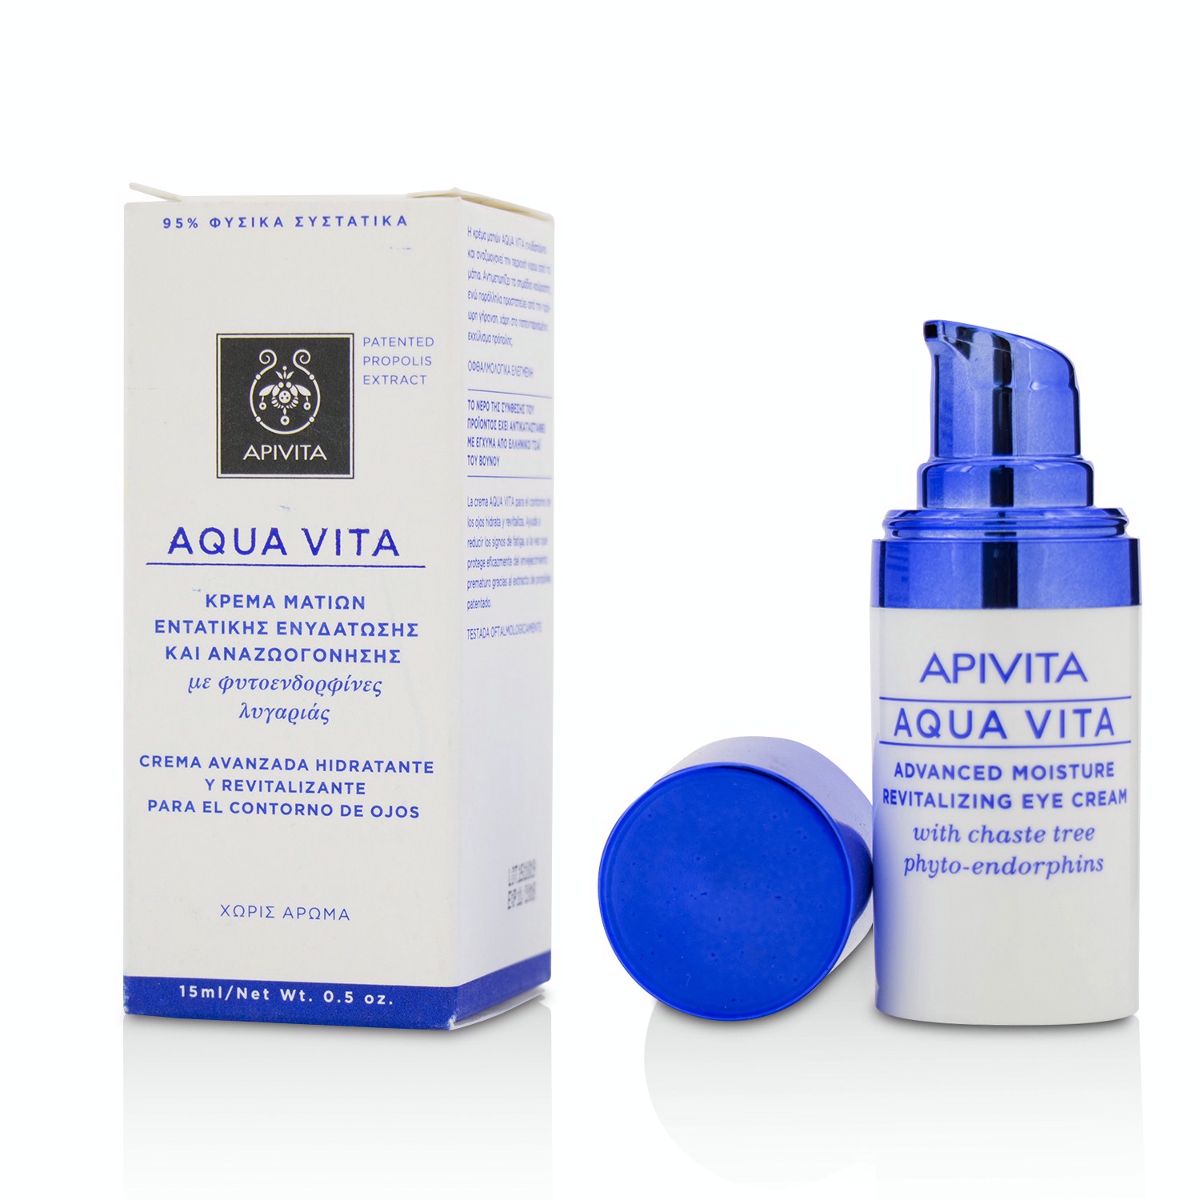 Aqua Vita Advanced Moisture Revitalizing Eye Cream Apivita Image